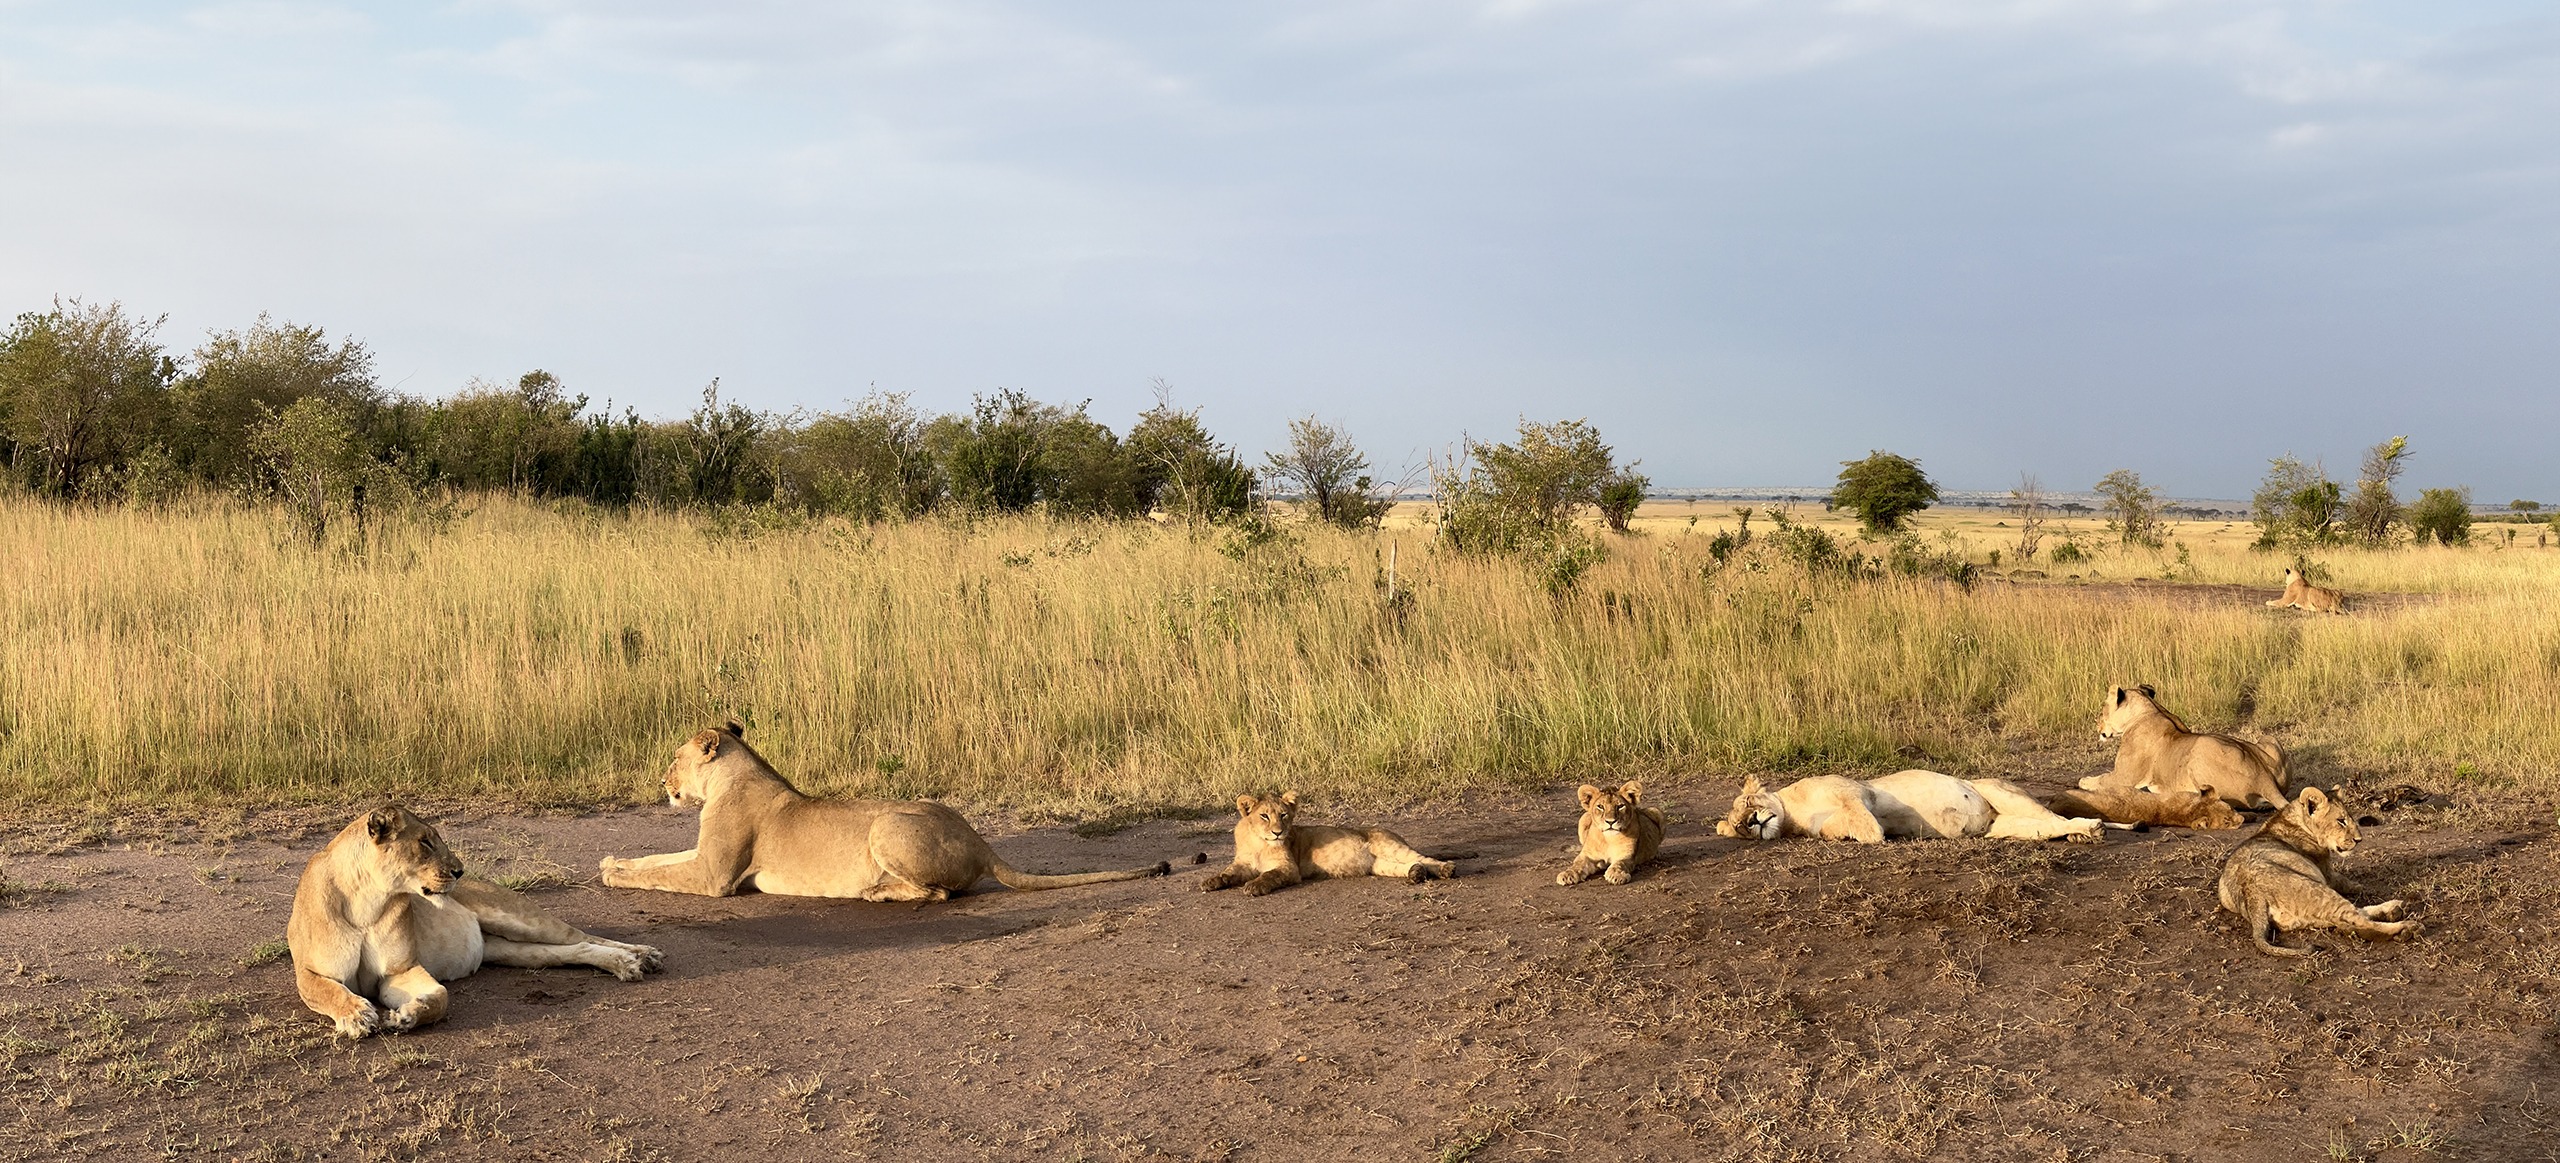 Safari Tours | Header Picture | Lions lying down in the Serengeti | Navel of Africa | Safari Tours | www.navelofafrica.com